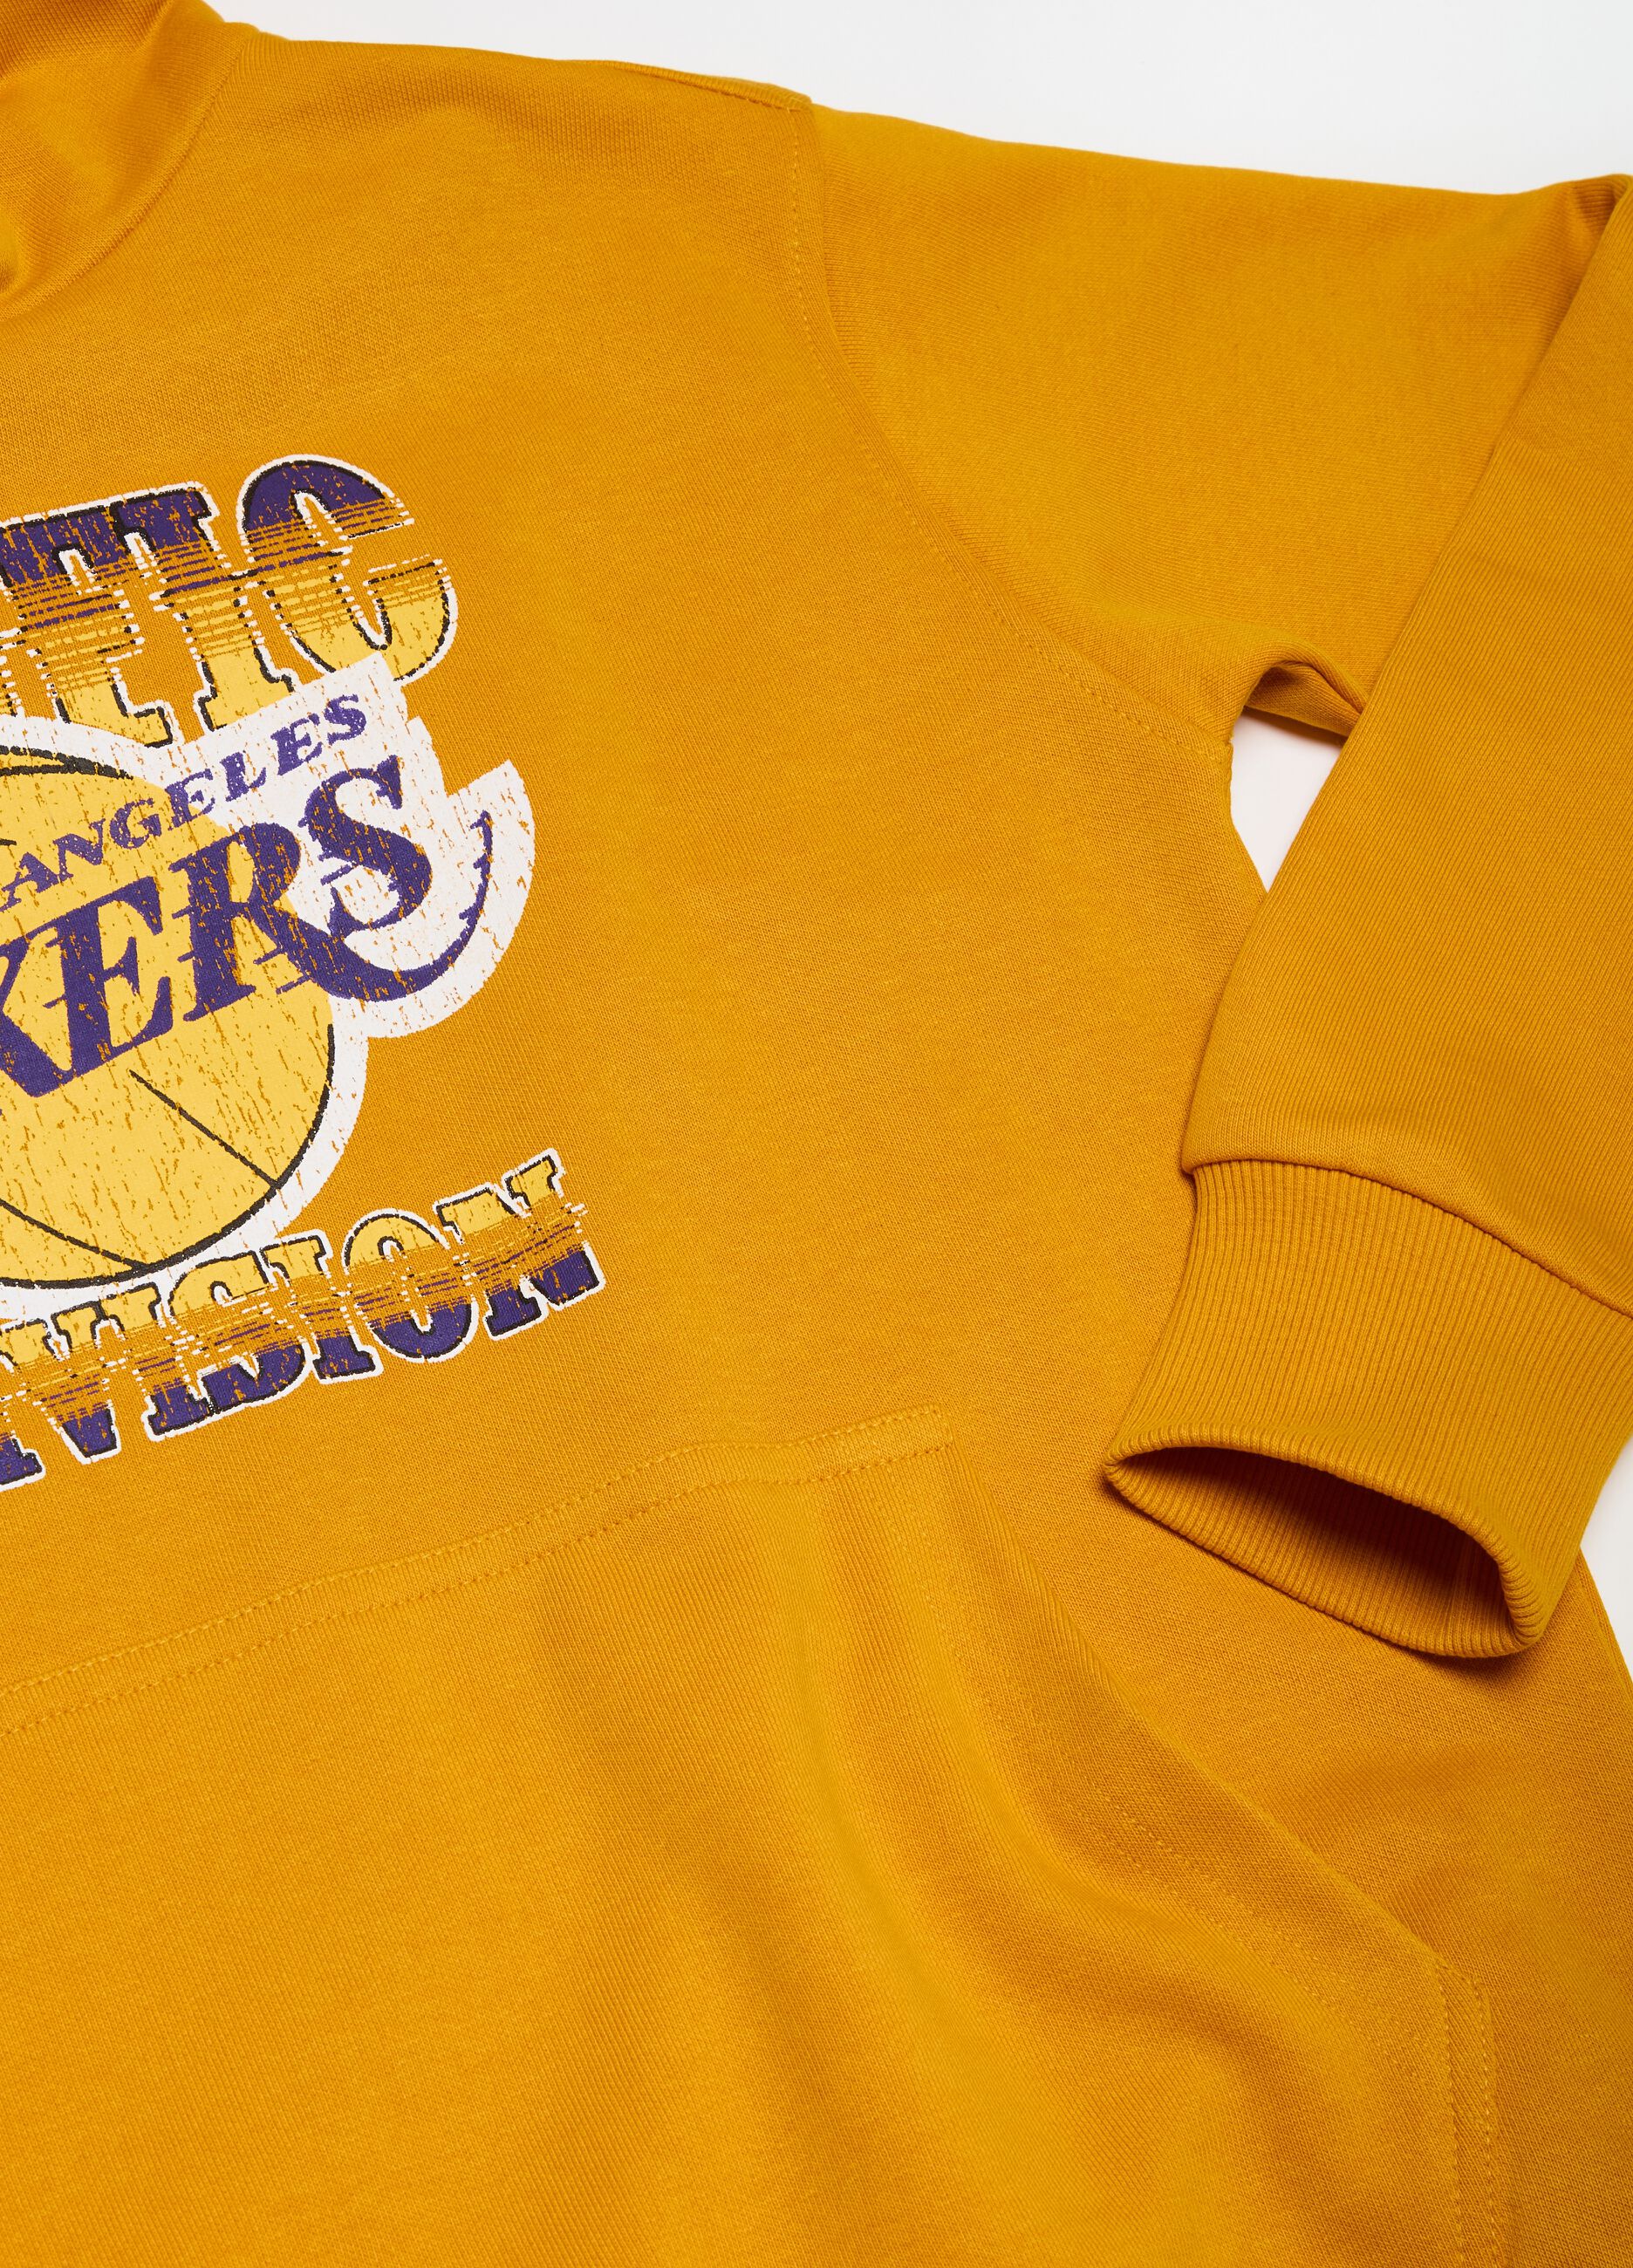 NBA Los Angeles Lakers sweatshirt with hood